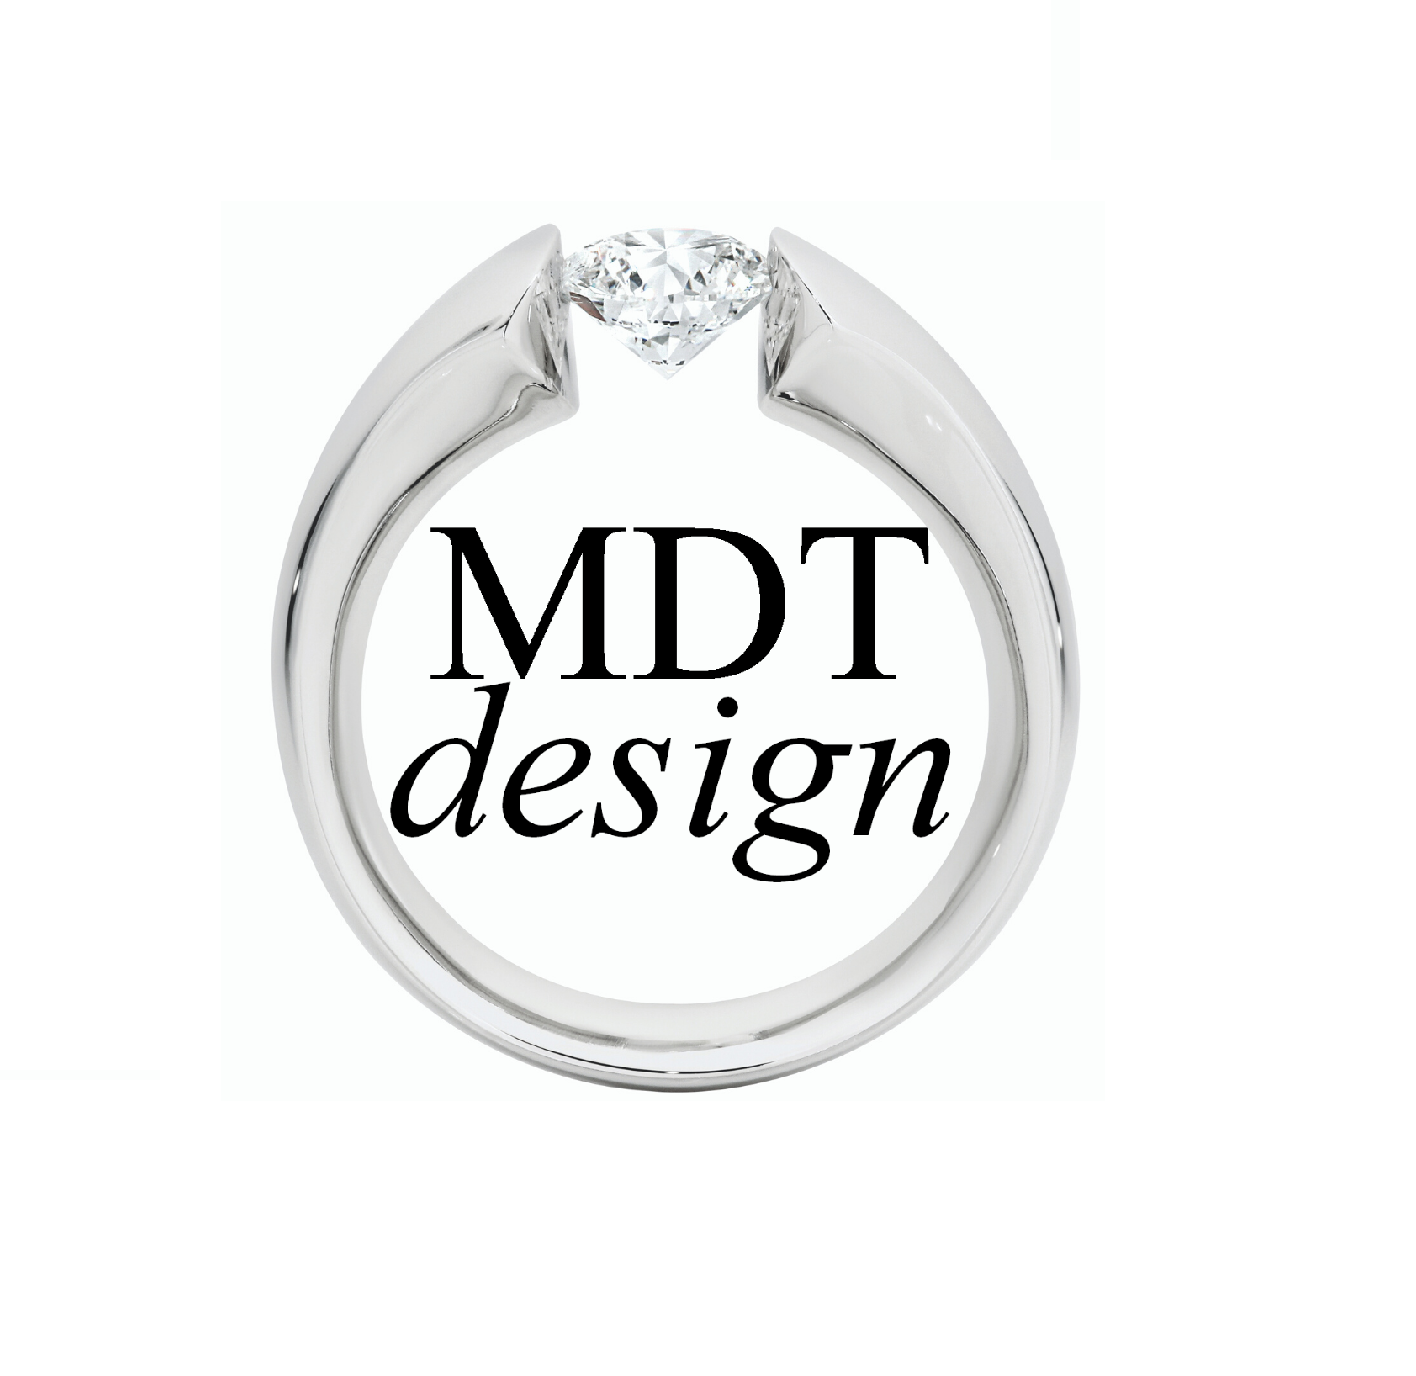 MDT design